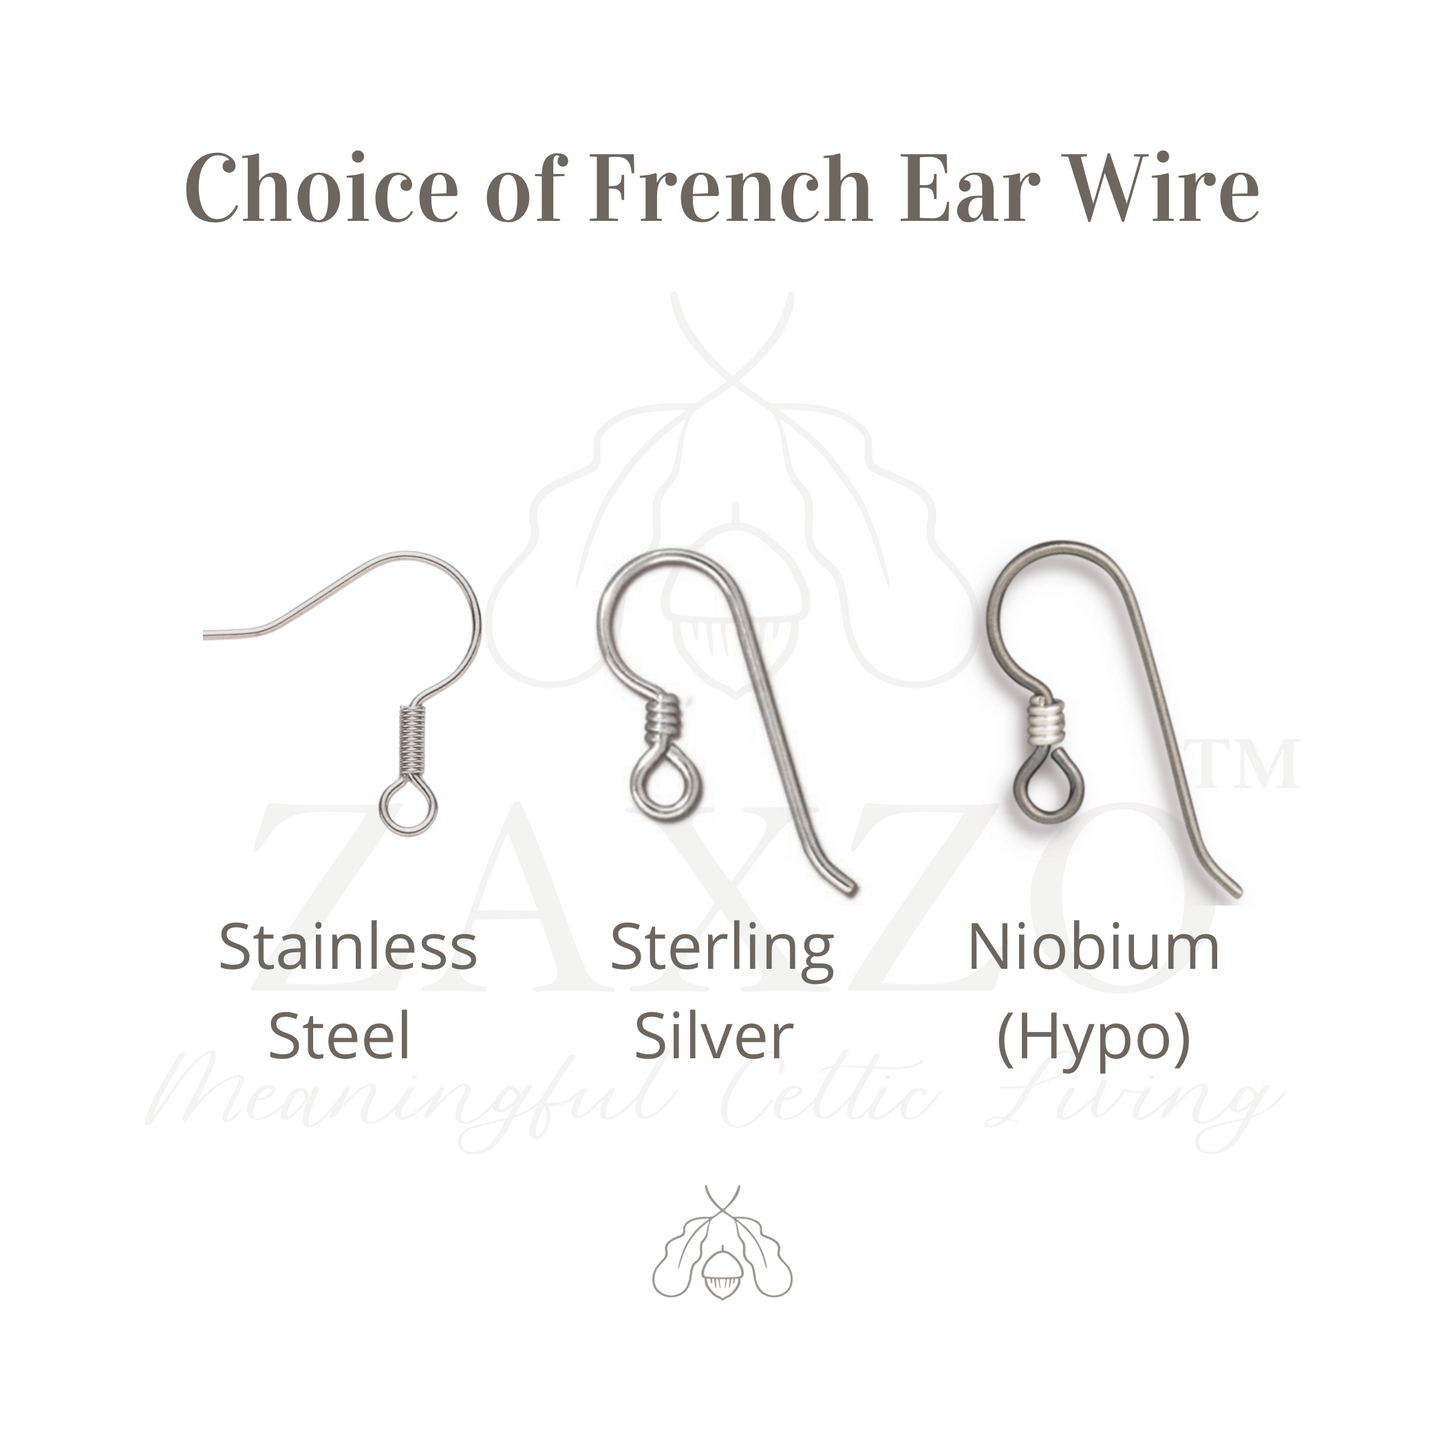 Irish Silver Claddagh Earrings with Hypo Wire Option - Medium.